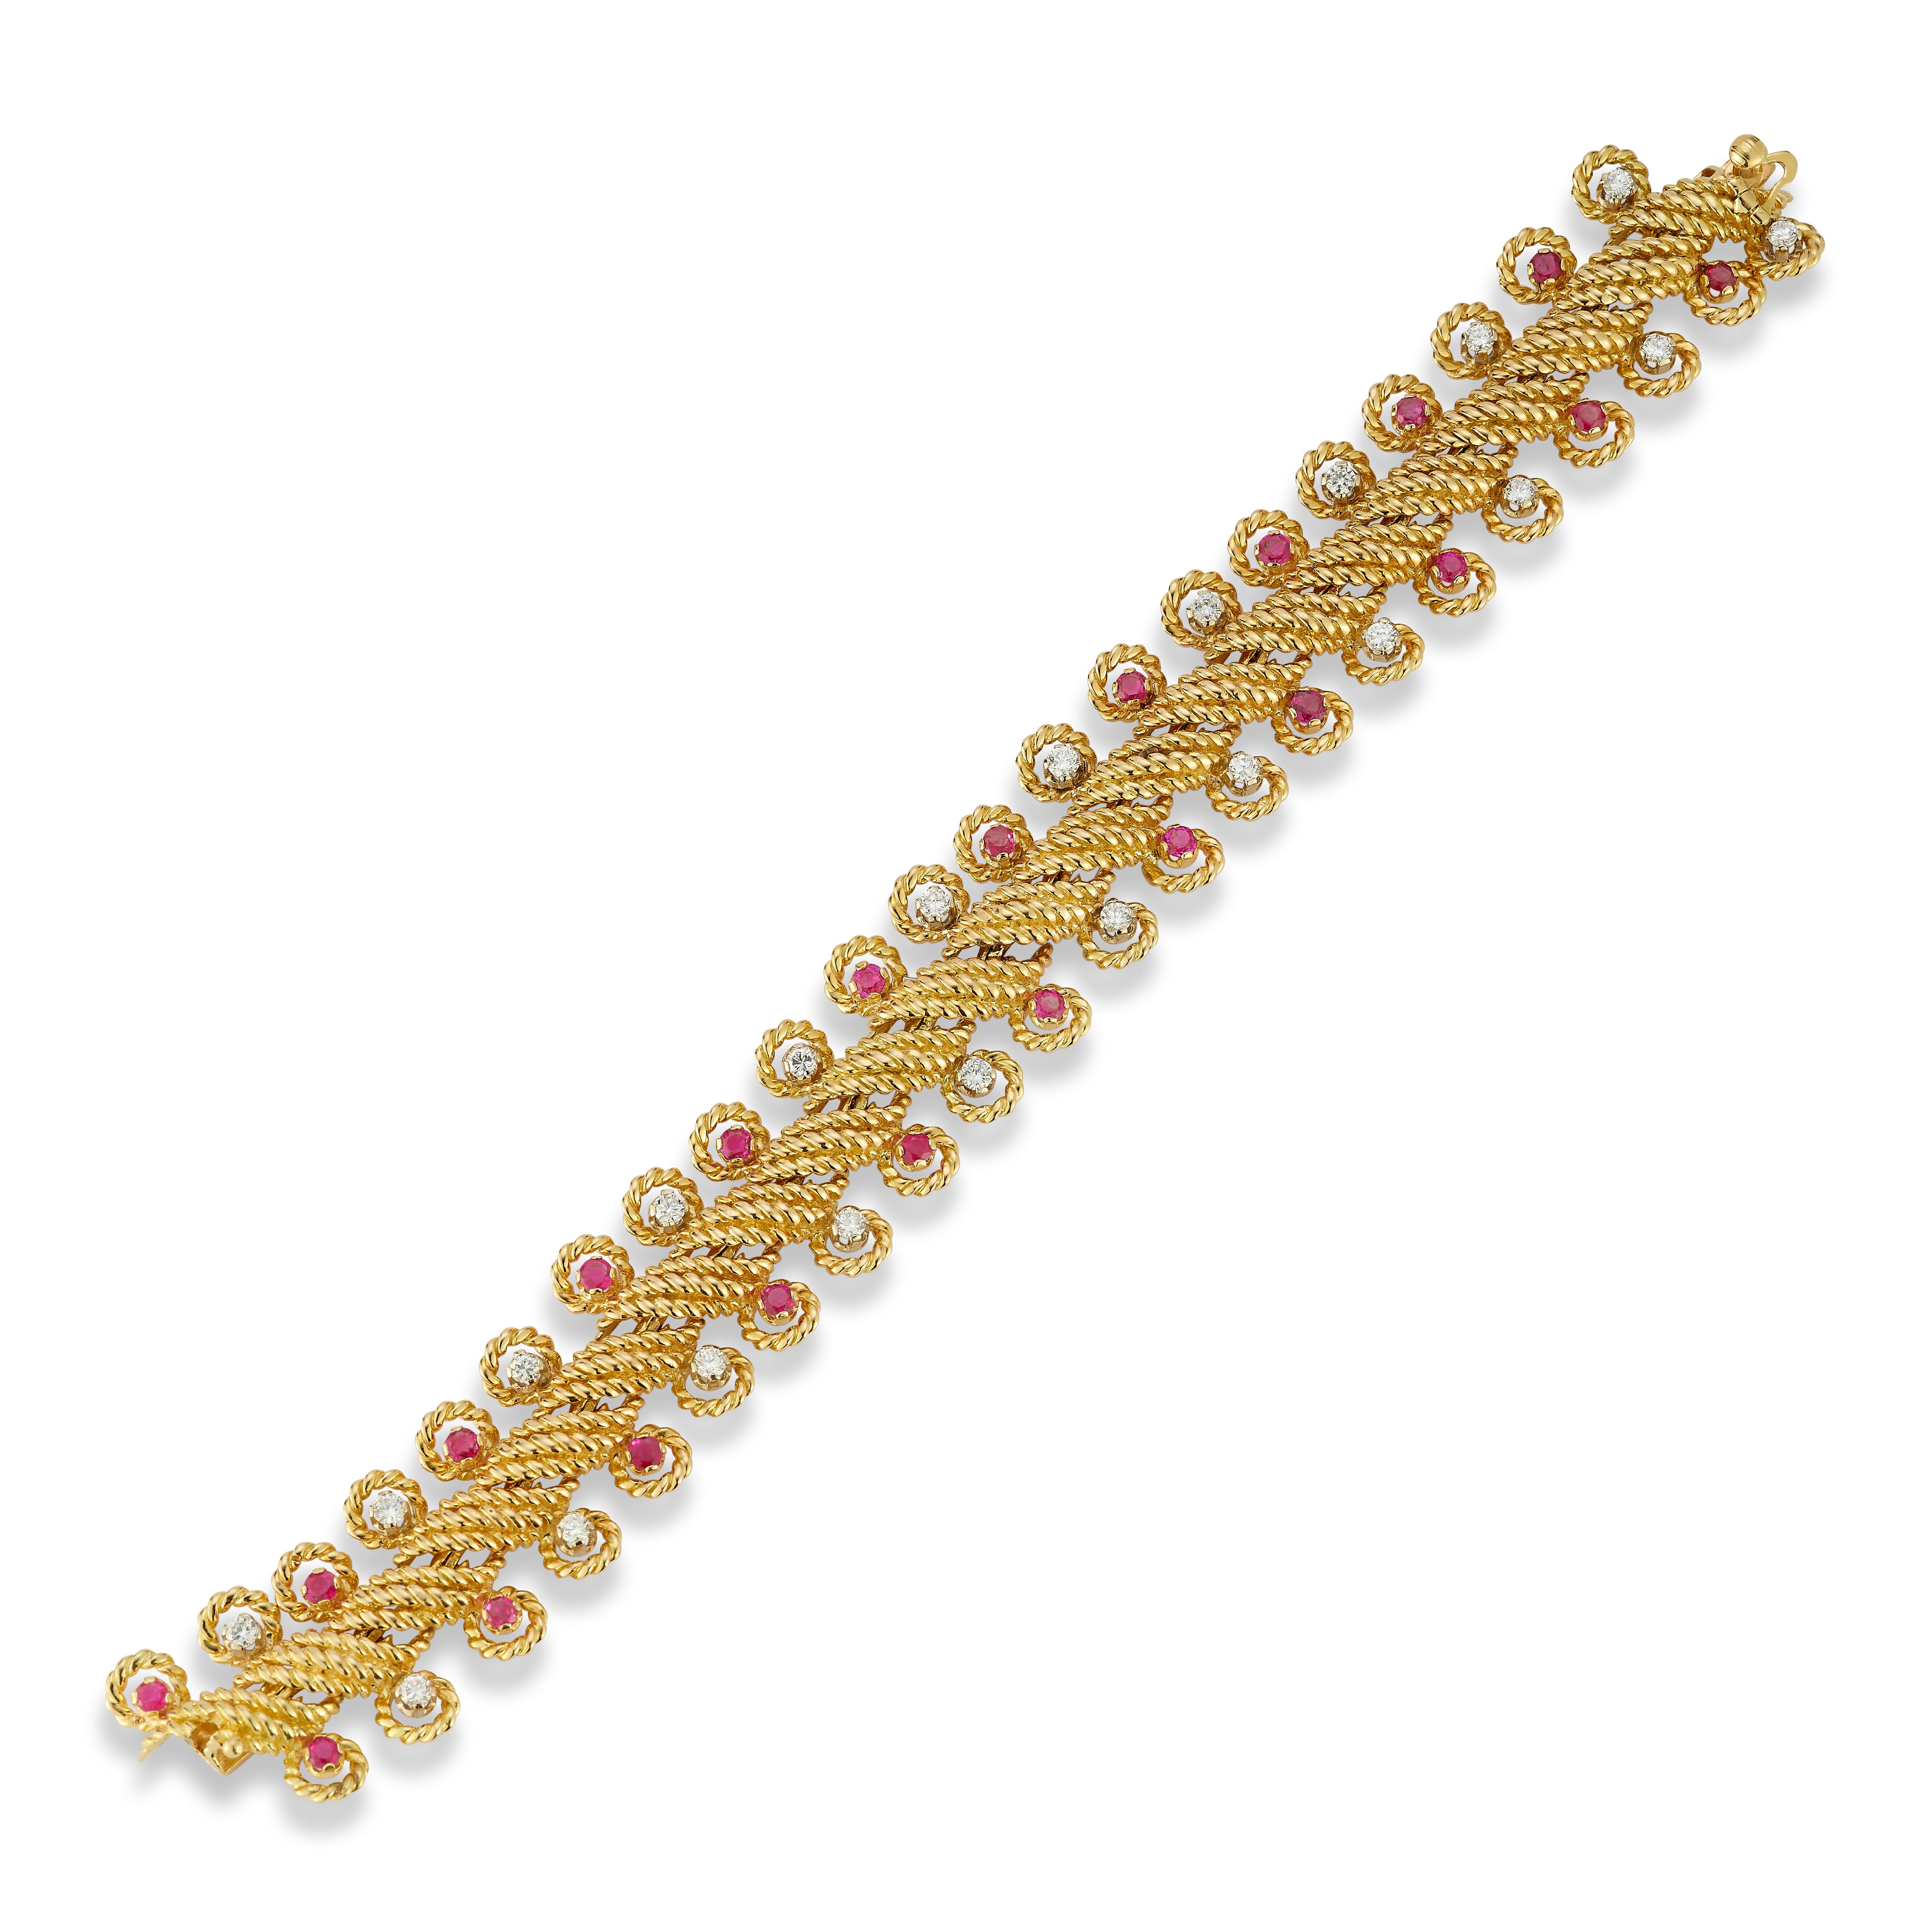 Van Cleef & Arpels Diamond & Ruby Bracelet

A gold bracelet set with round cut diamonds & rubies 
Measurements: 7.5